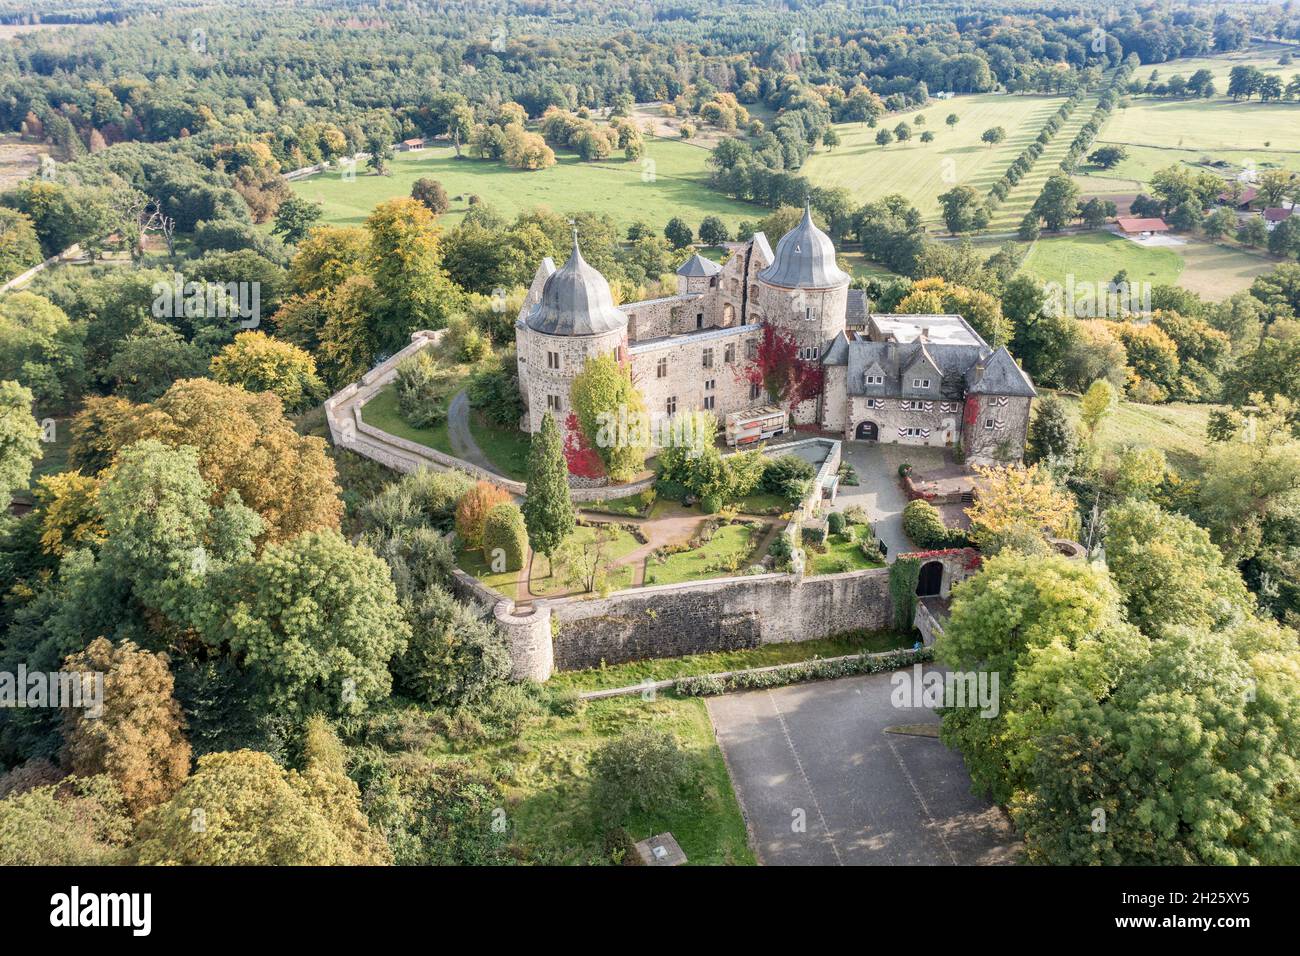 The Sababurg, the castle of the sleeping beauty,  Sababurg, Germany Stock Photo